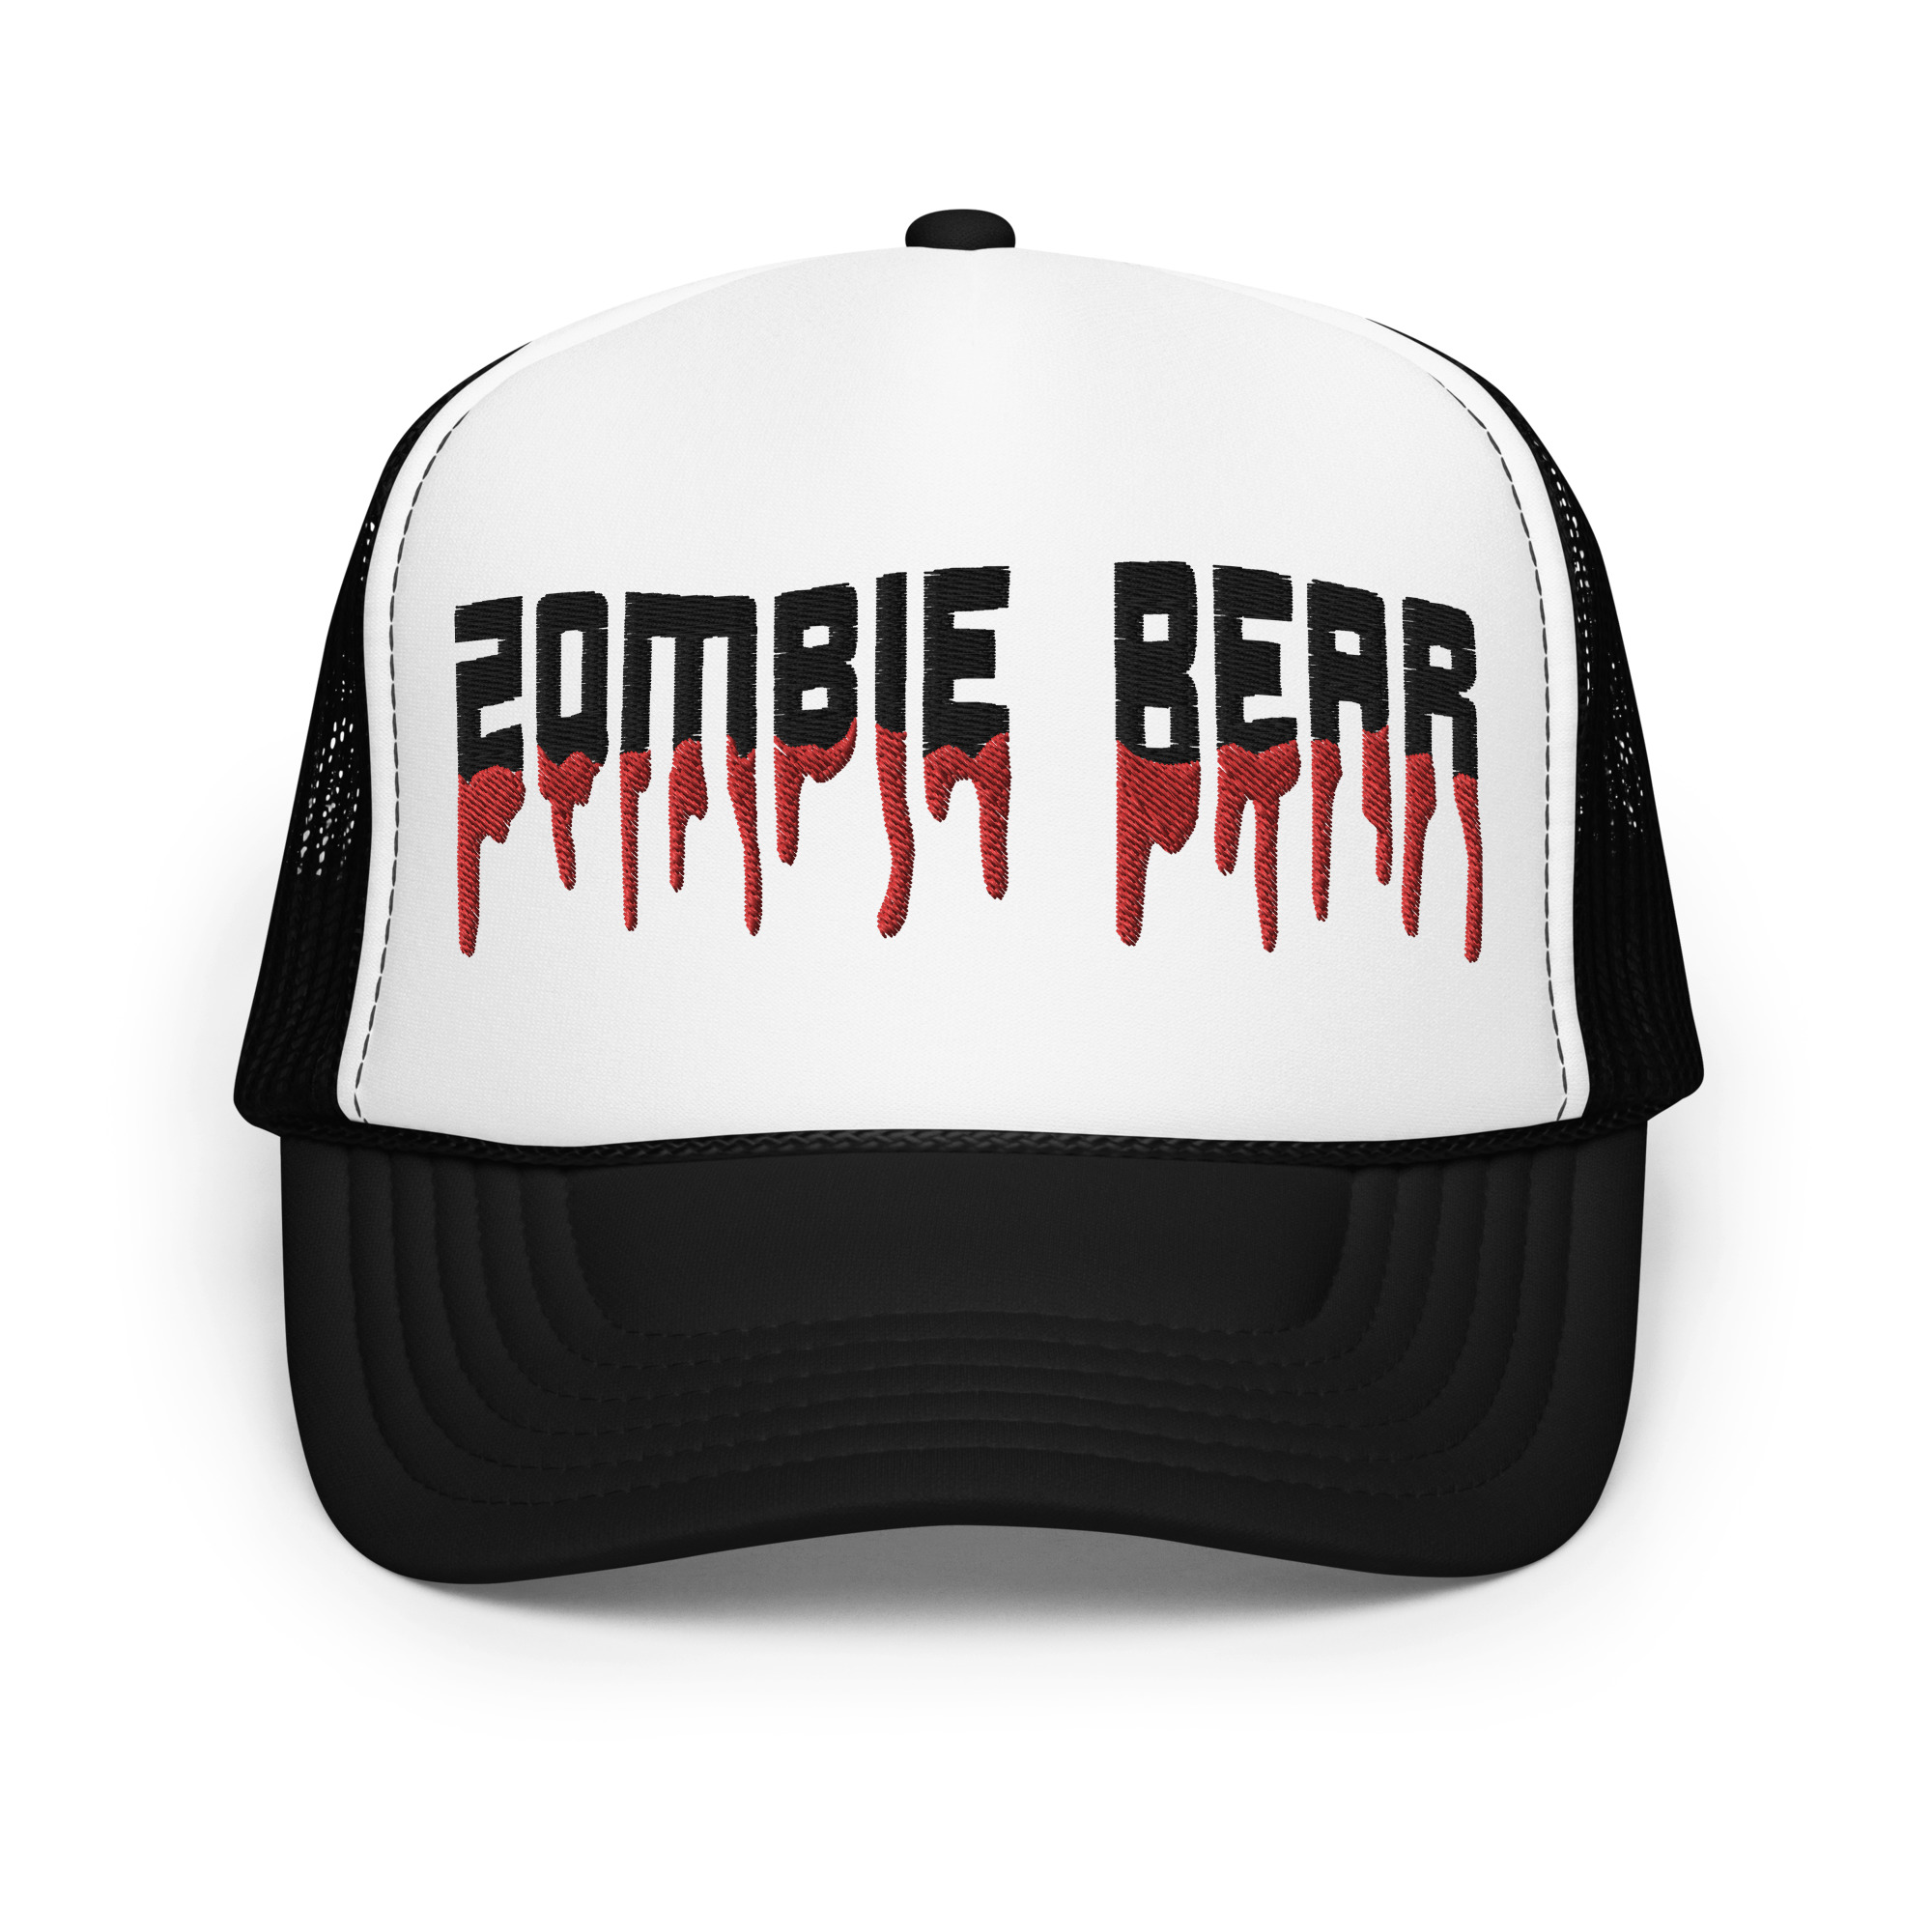 Featured image for “Zombie Bear - Puffy Foam trucker hat”